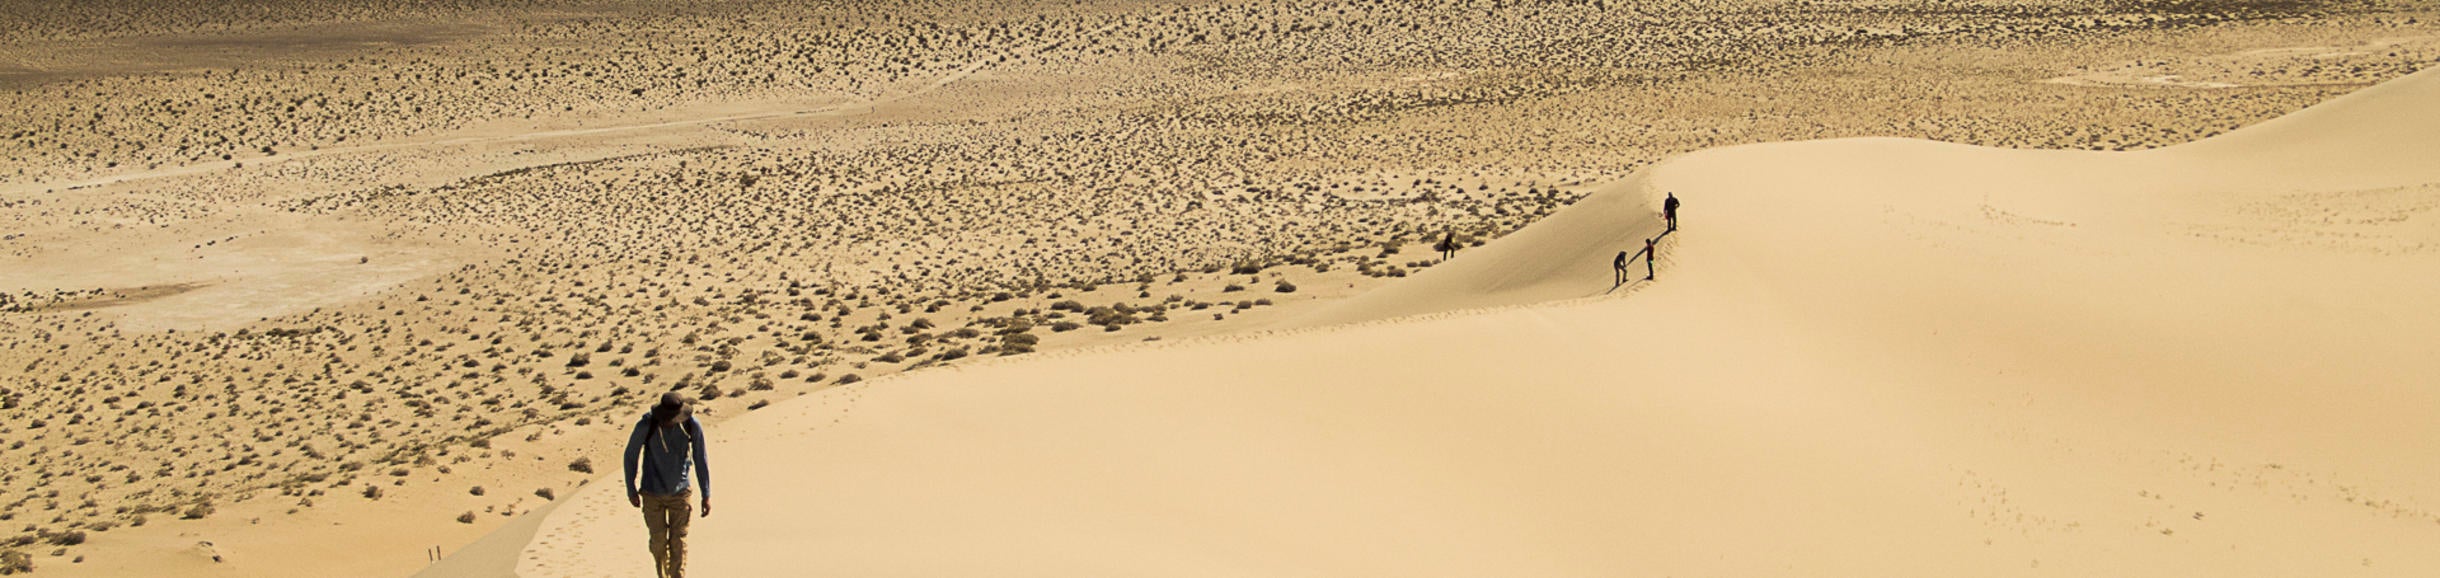 People walking on the ridge of a sand dune